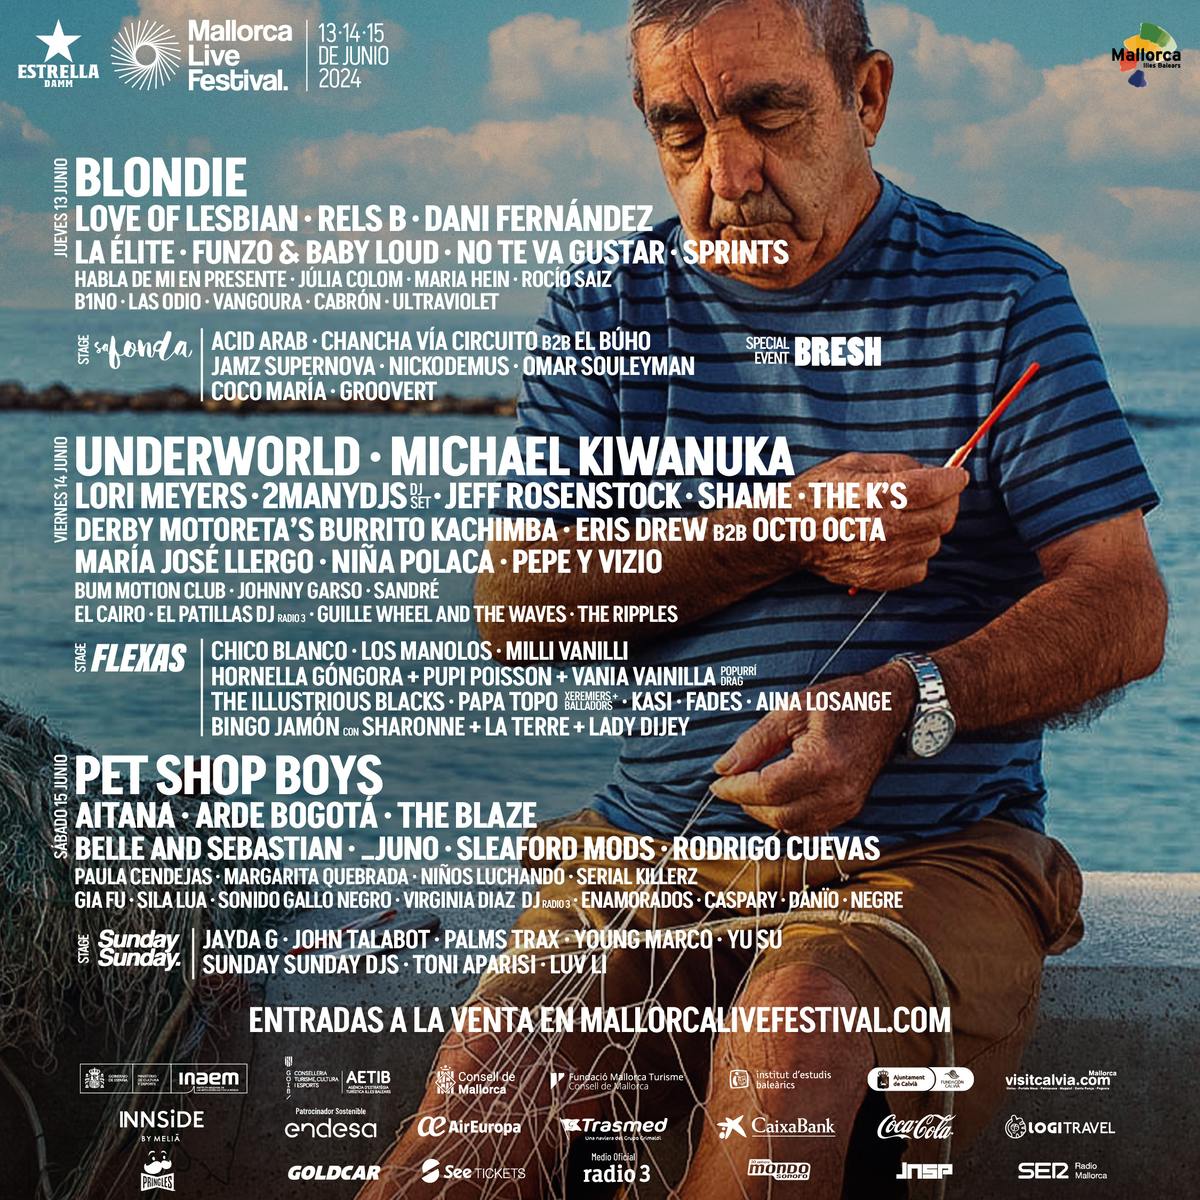 Weekender (vrijdag+zaterdag) Ticket Mallorca Live Festival 2024